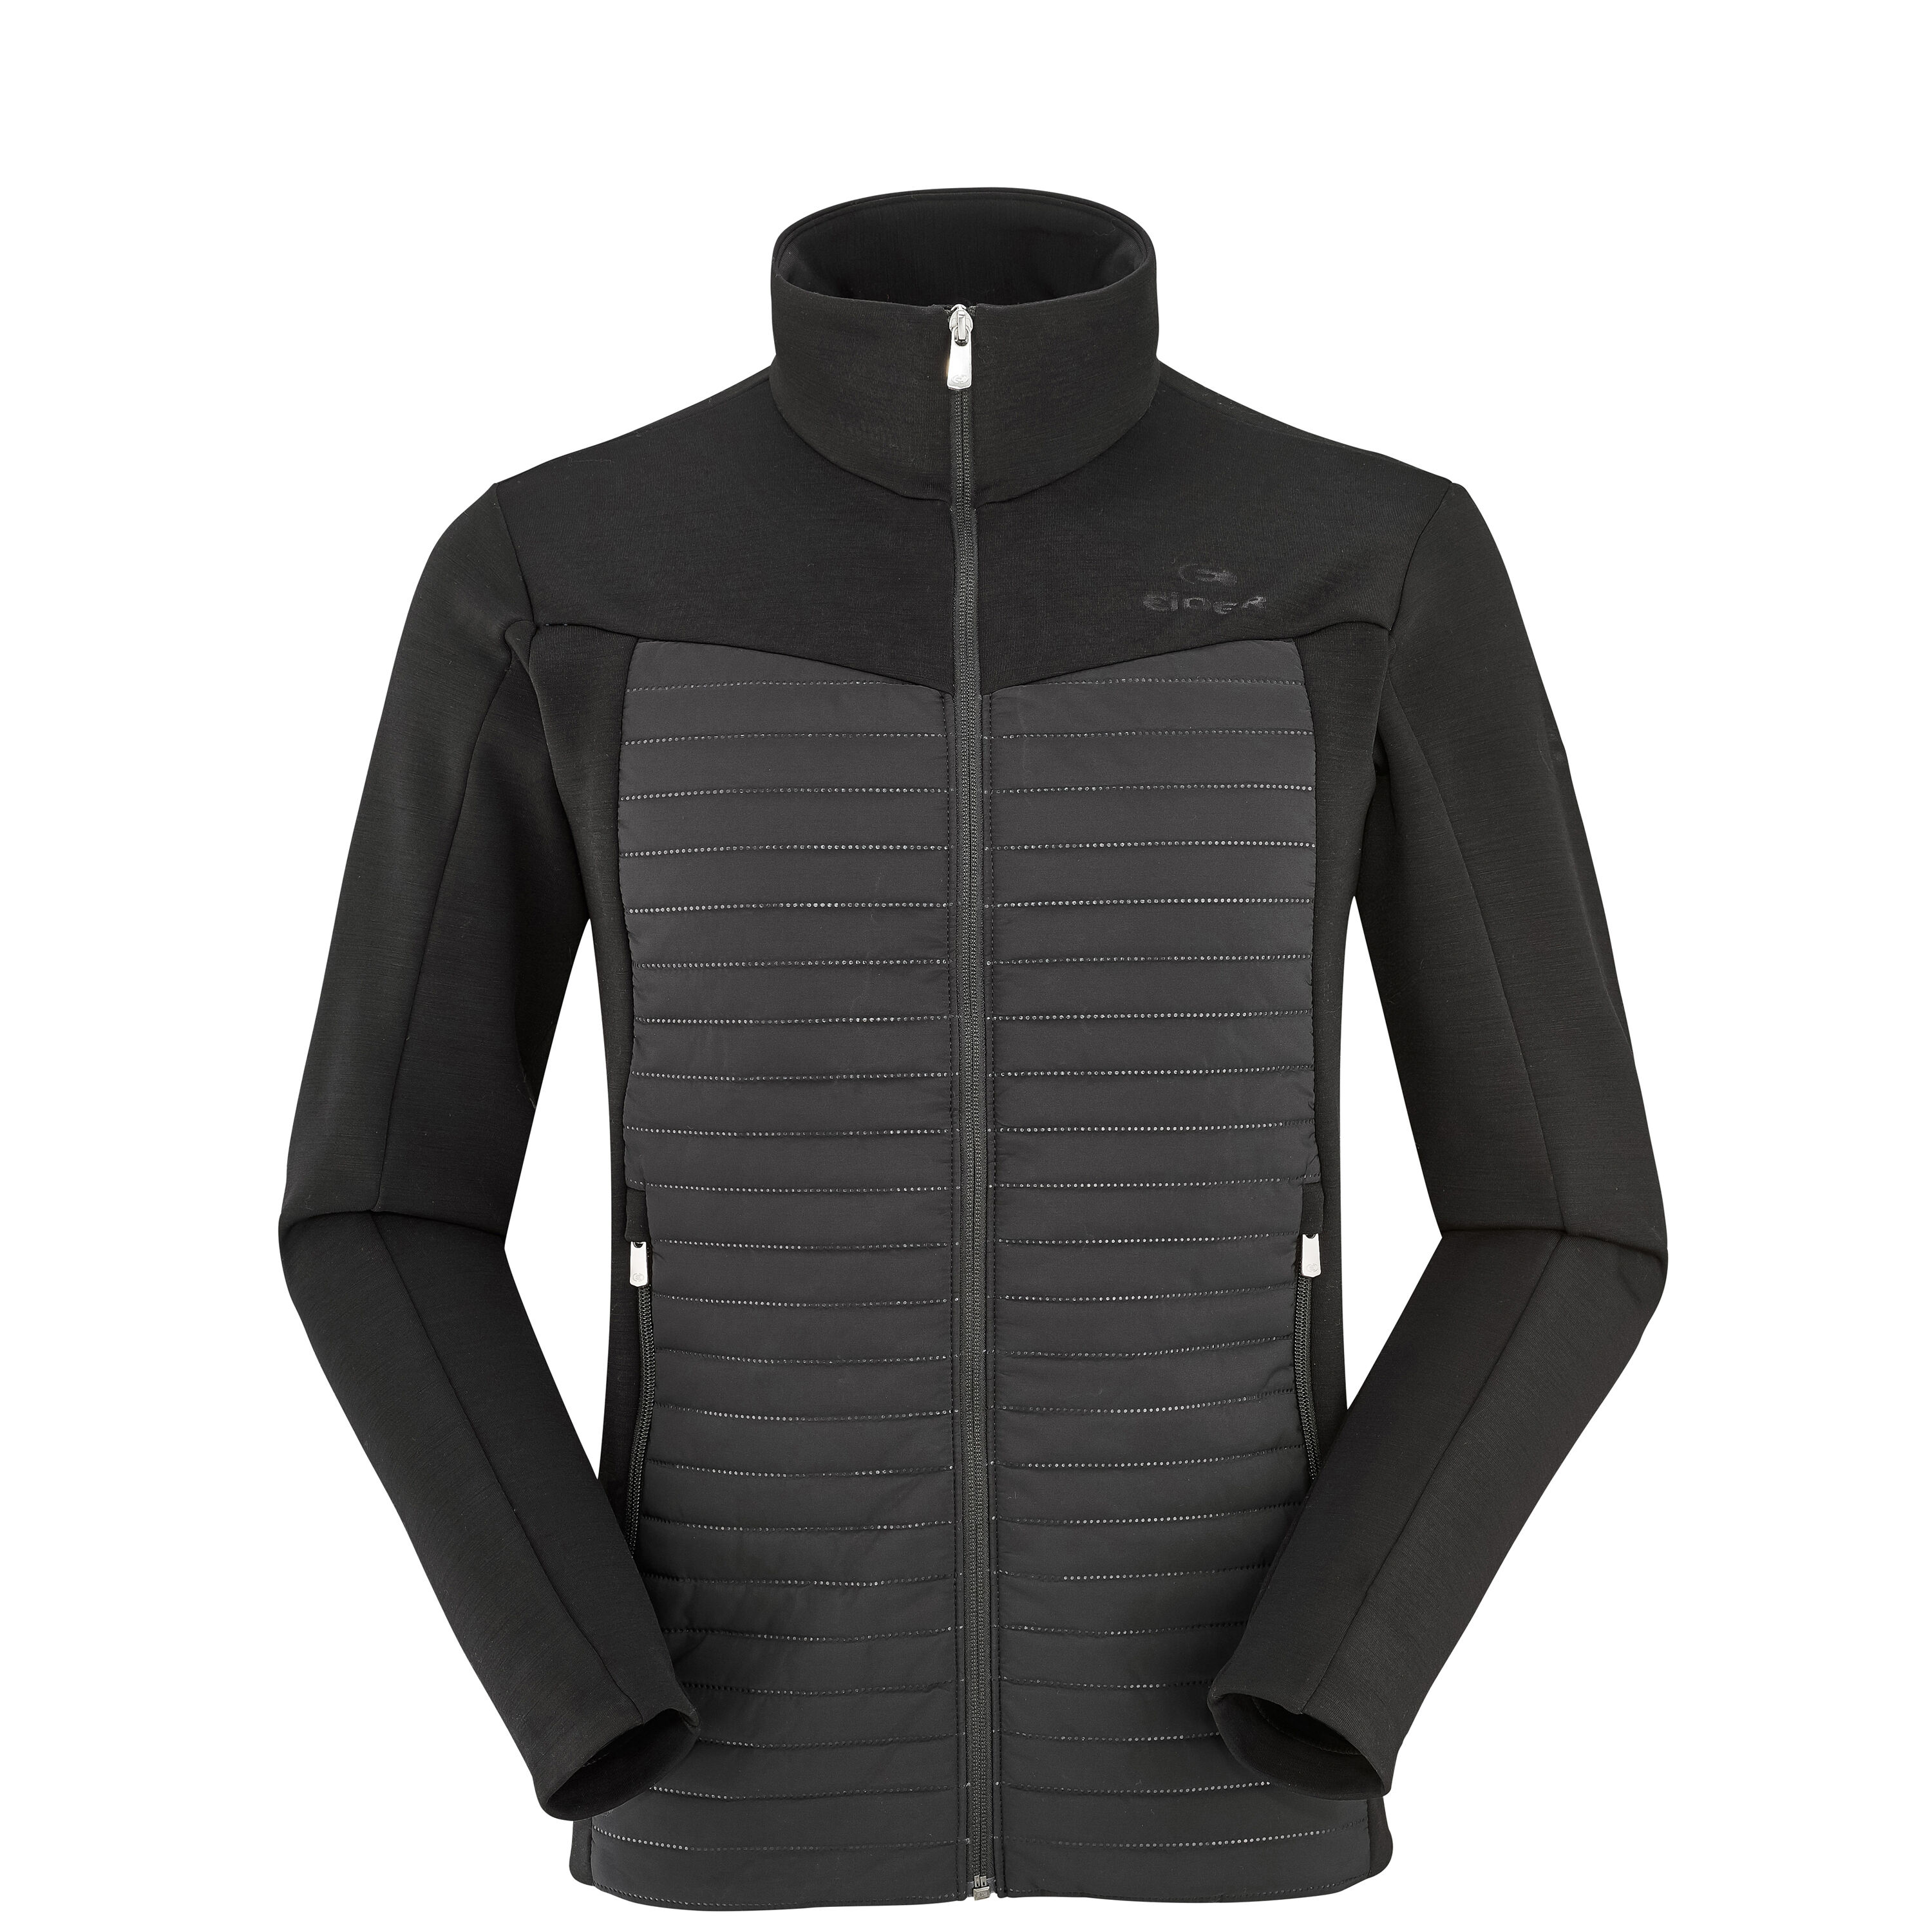 Eider - Alpine Meadows Jkt M - Fleece jacket - Men's